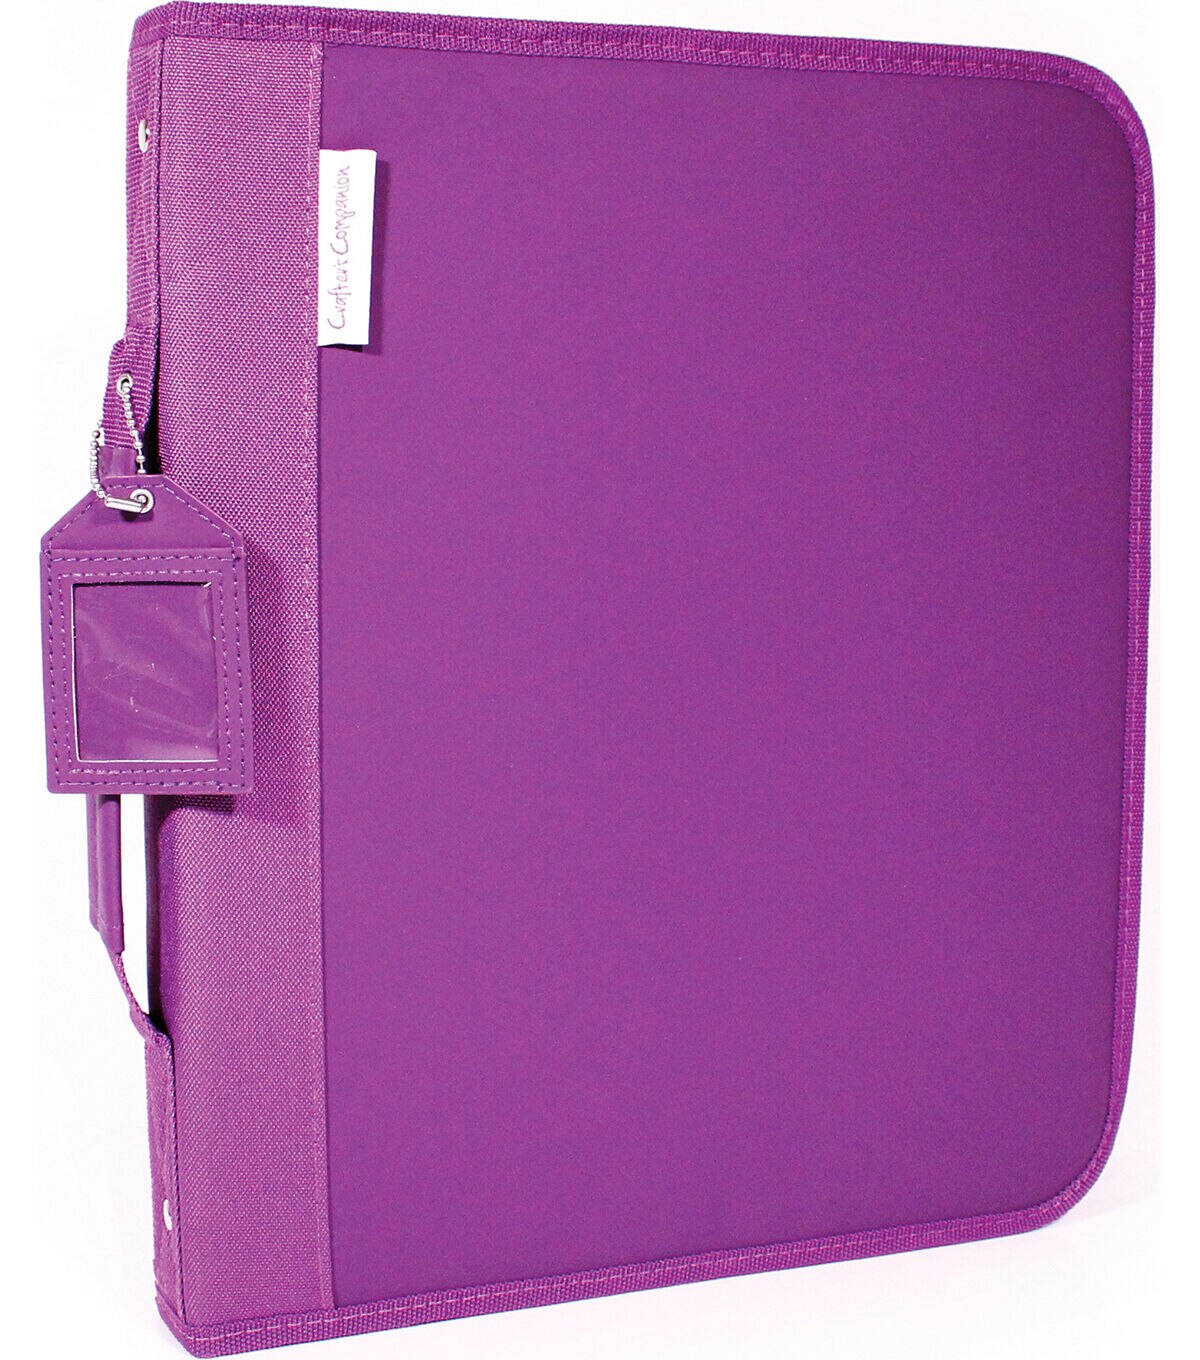 Crafter's Companion Die & Stamp Storage Folder-Large Purple One Size 